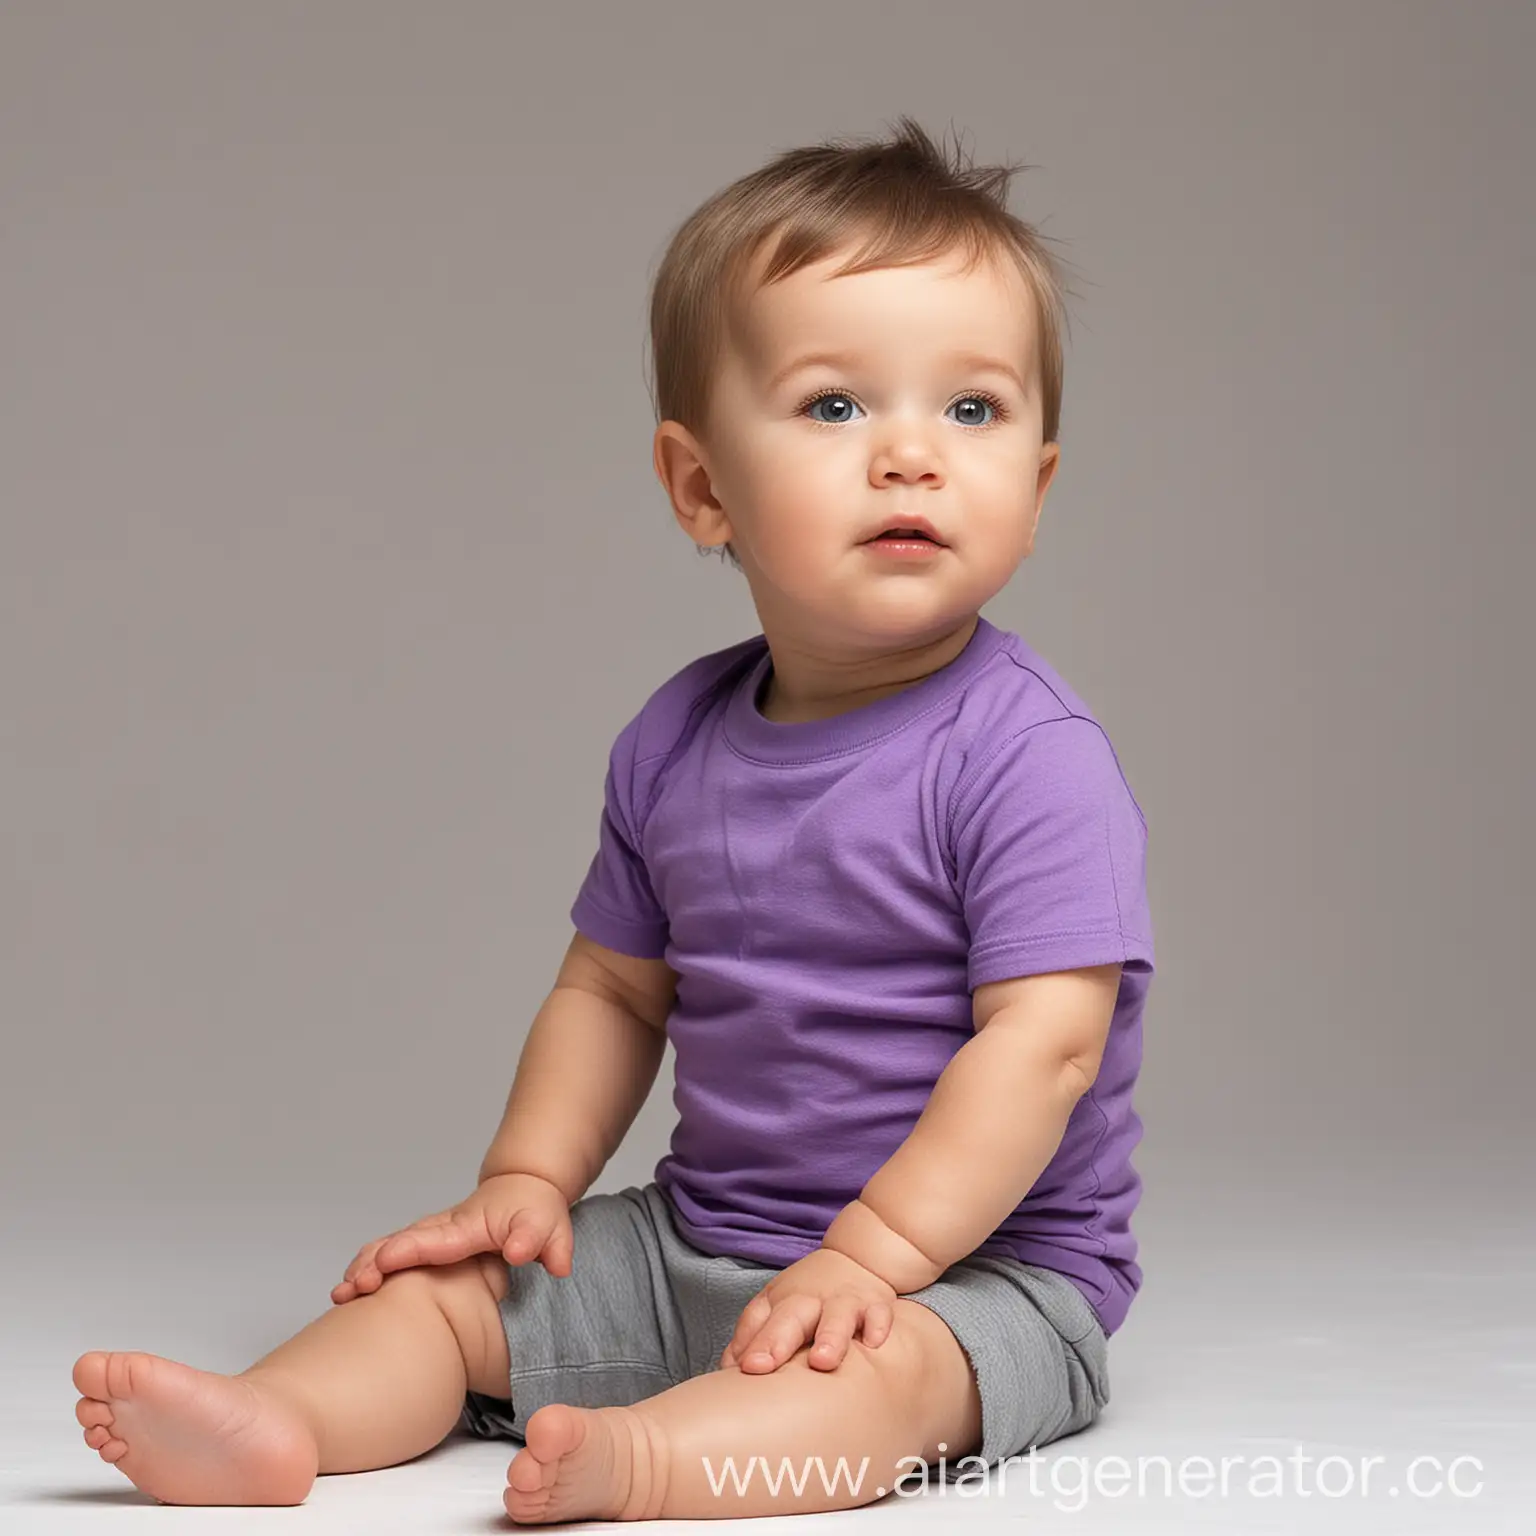 OneYearOld-Baby-Boy-in-Purple-TShirt-Sitting-in-Bright-Light